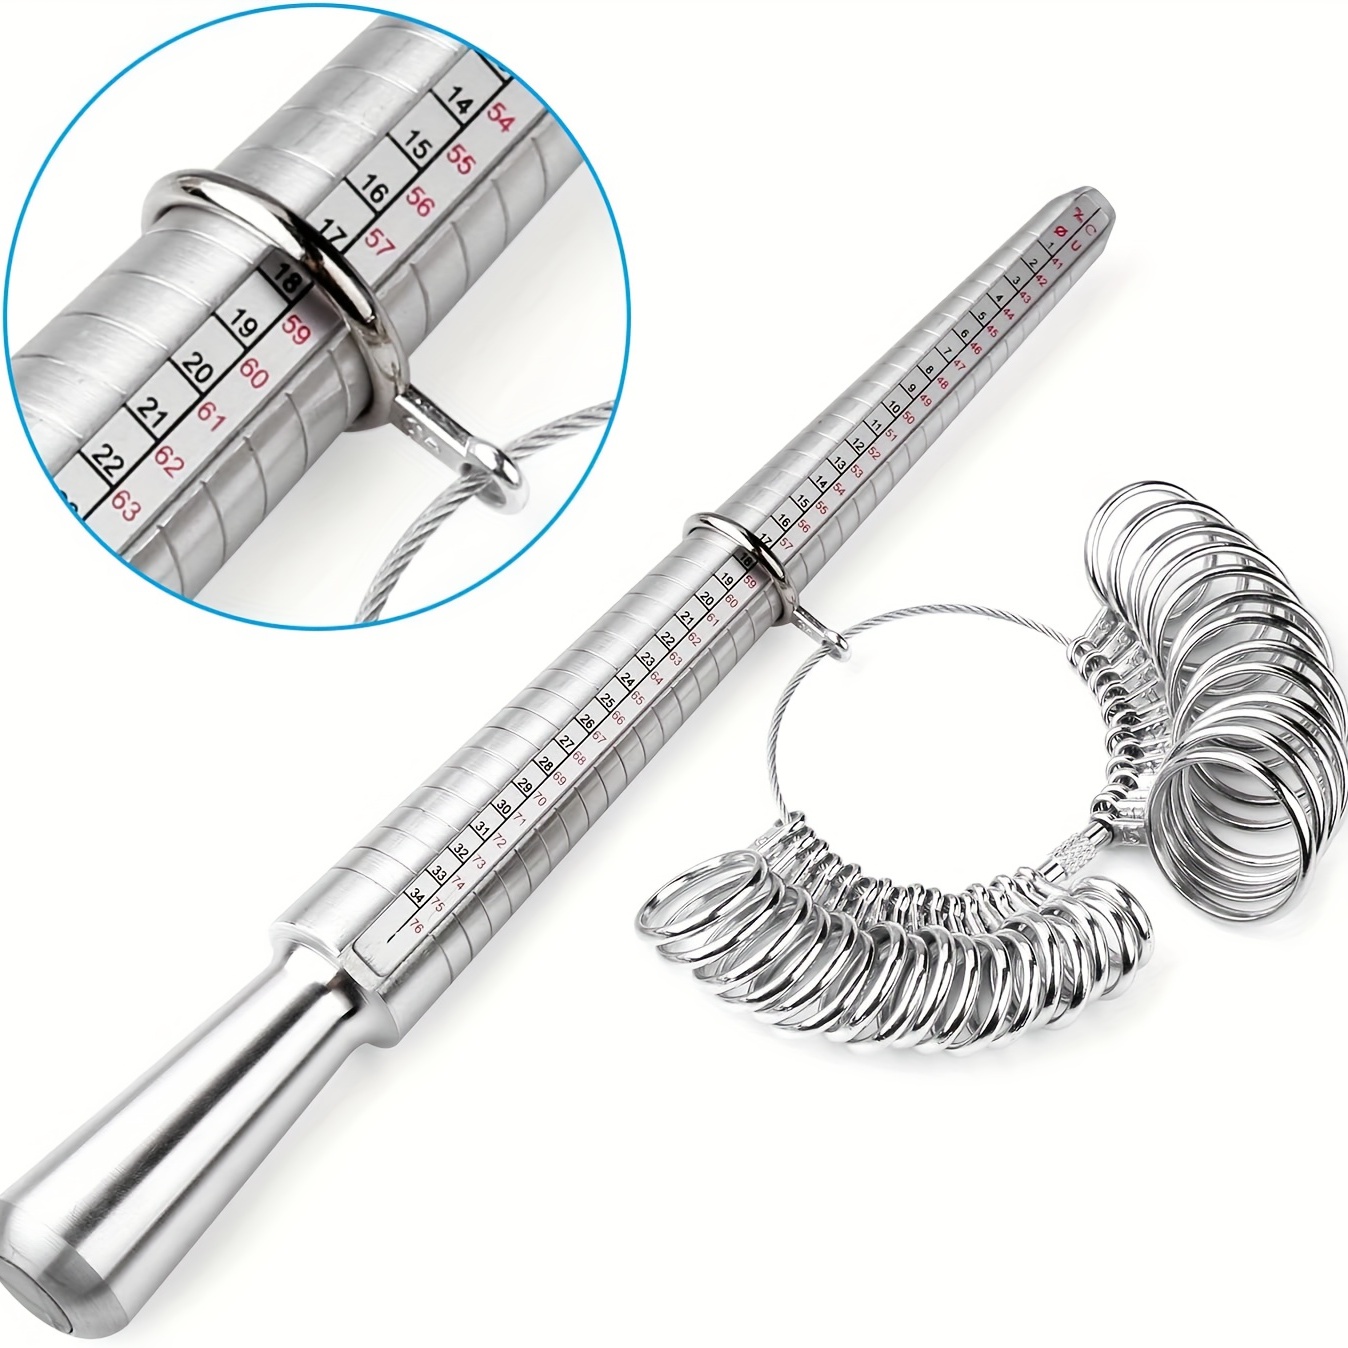 Aluminum Ring Mandrel Sizer Finger Sizing Measuring Stick Ring Sizer Gauge  Set of 27 Pcs Ring Gauges Finger Sizer Measuring Tool - AliExpress